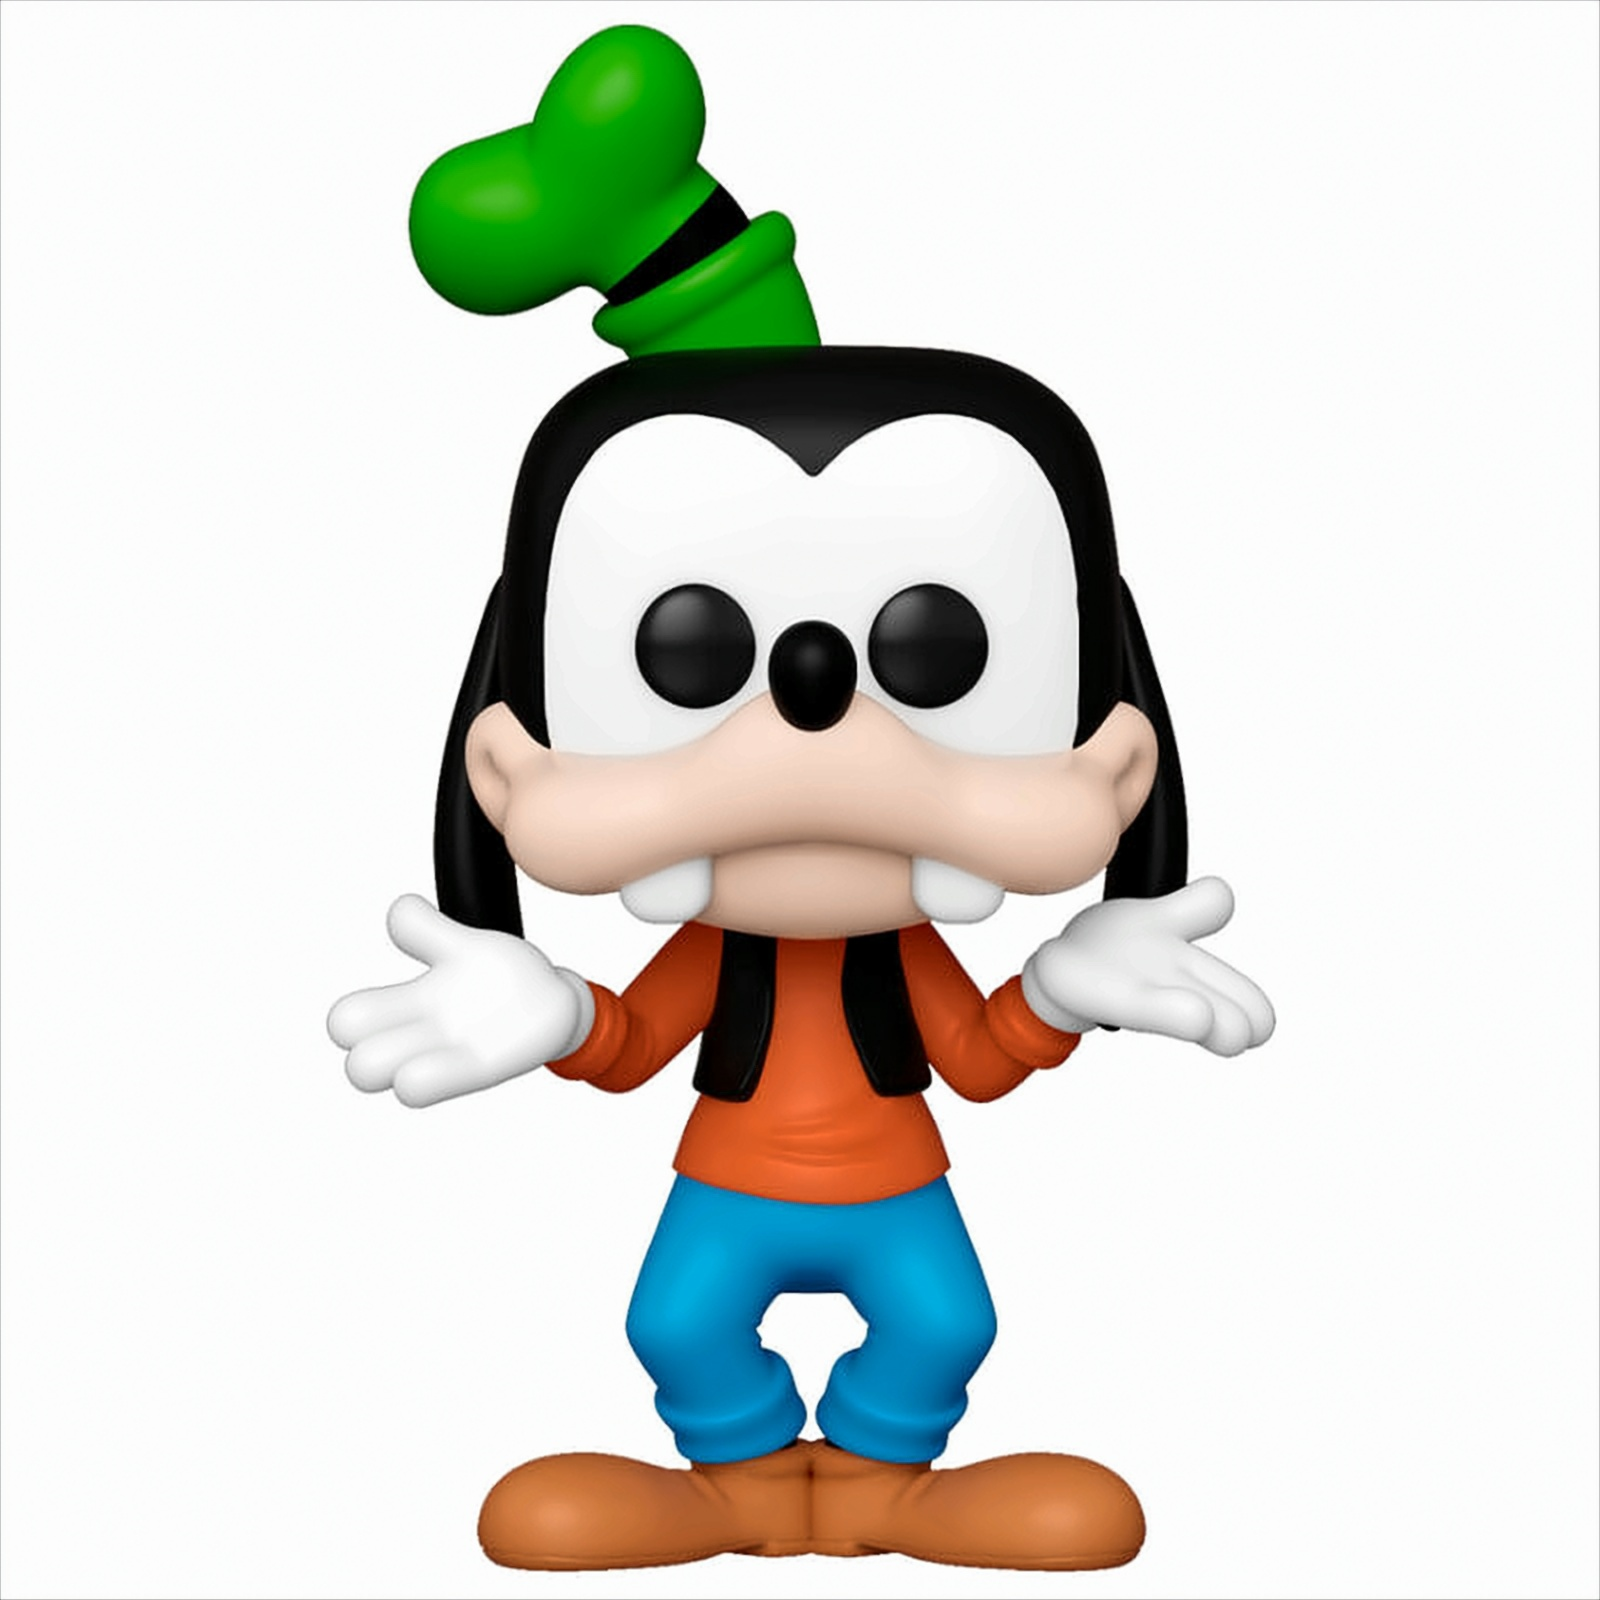 Disney - - POP and Goofy Mickey Friends